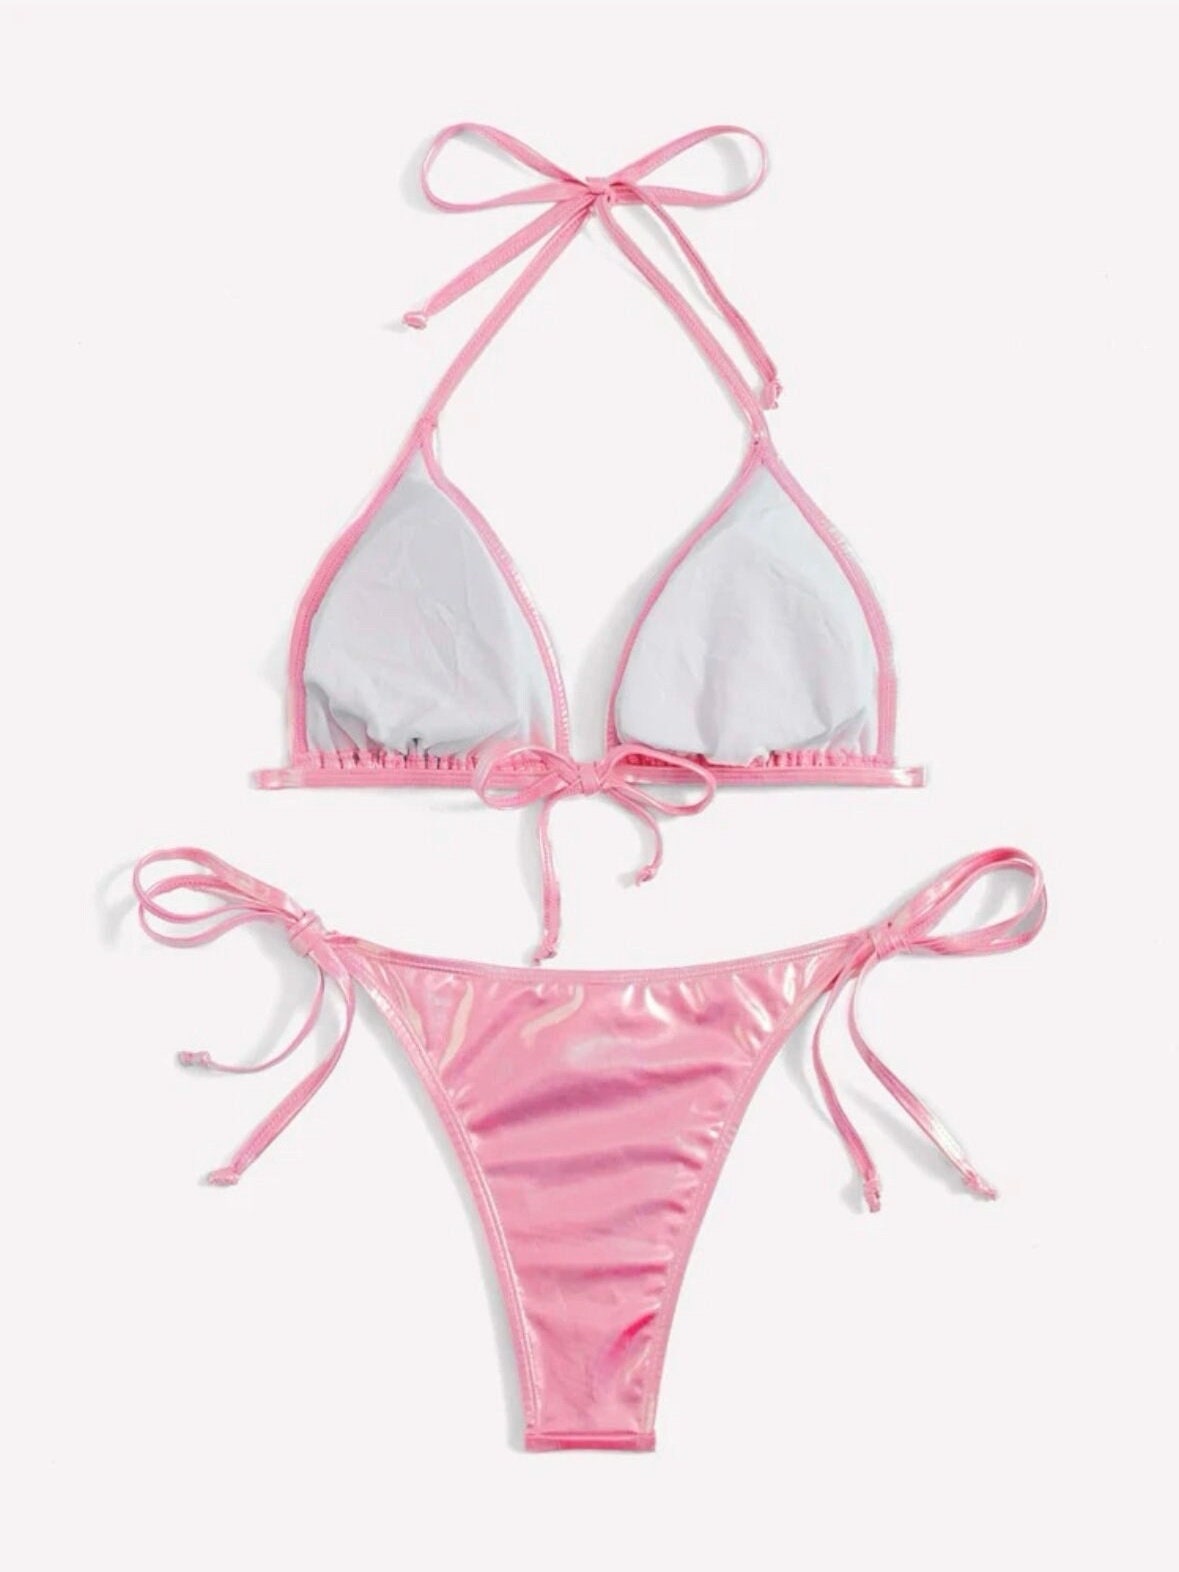 The Brianna Pink Metallic Bikini Set Halter Triangle Bra Top & Tie Side Bikini Bottom 2 Piece Bathing Suit